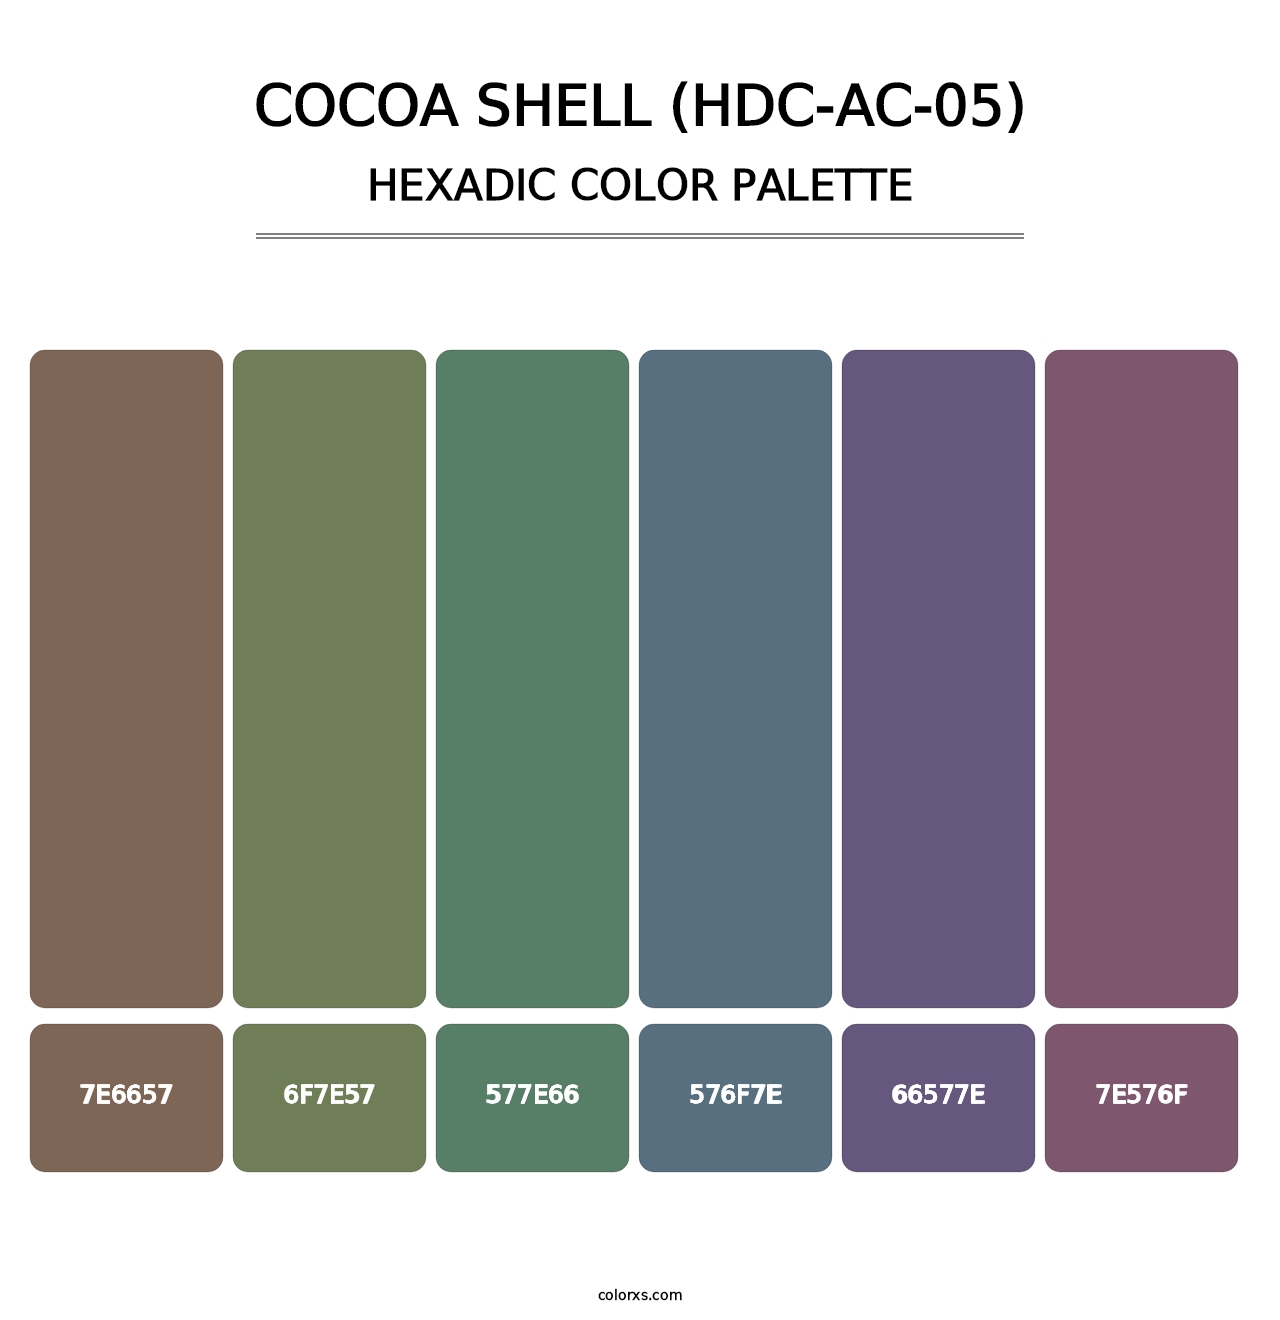 Cocoa Shell (HDC-AC-05) - Hexadic Color Palette